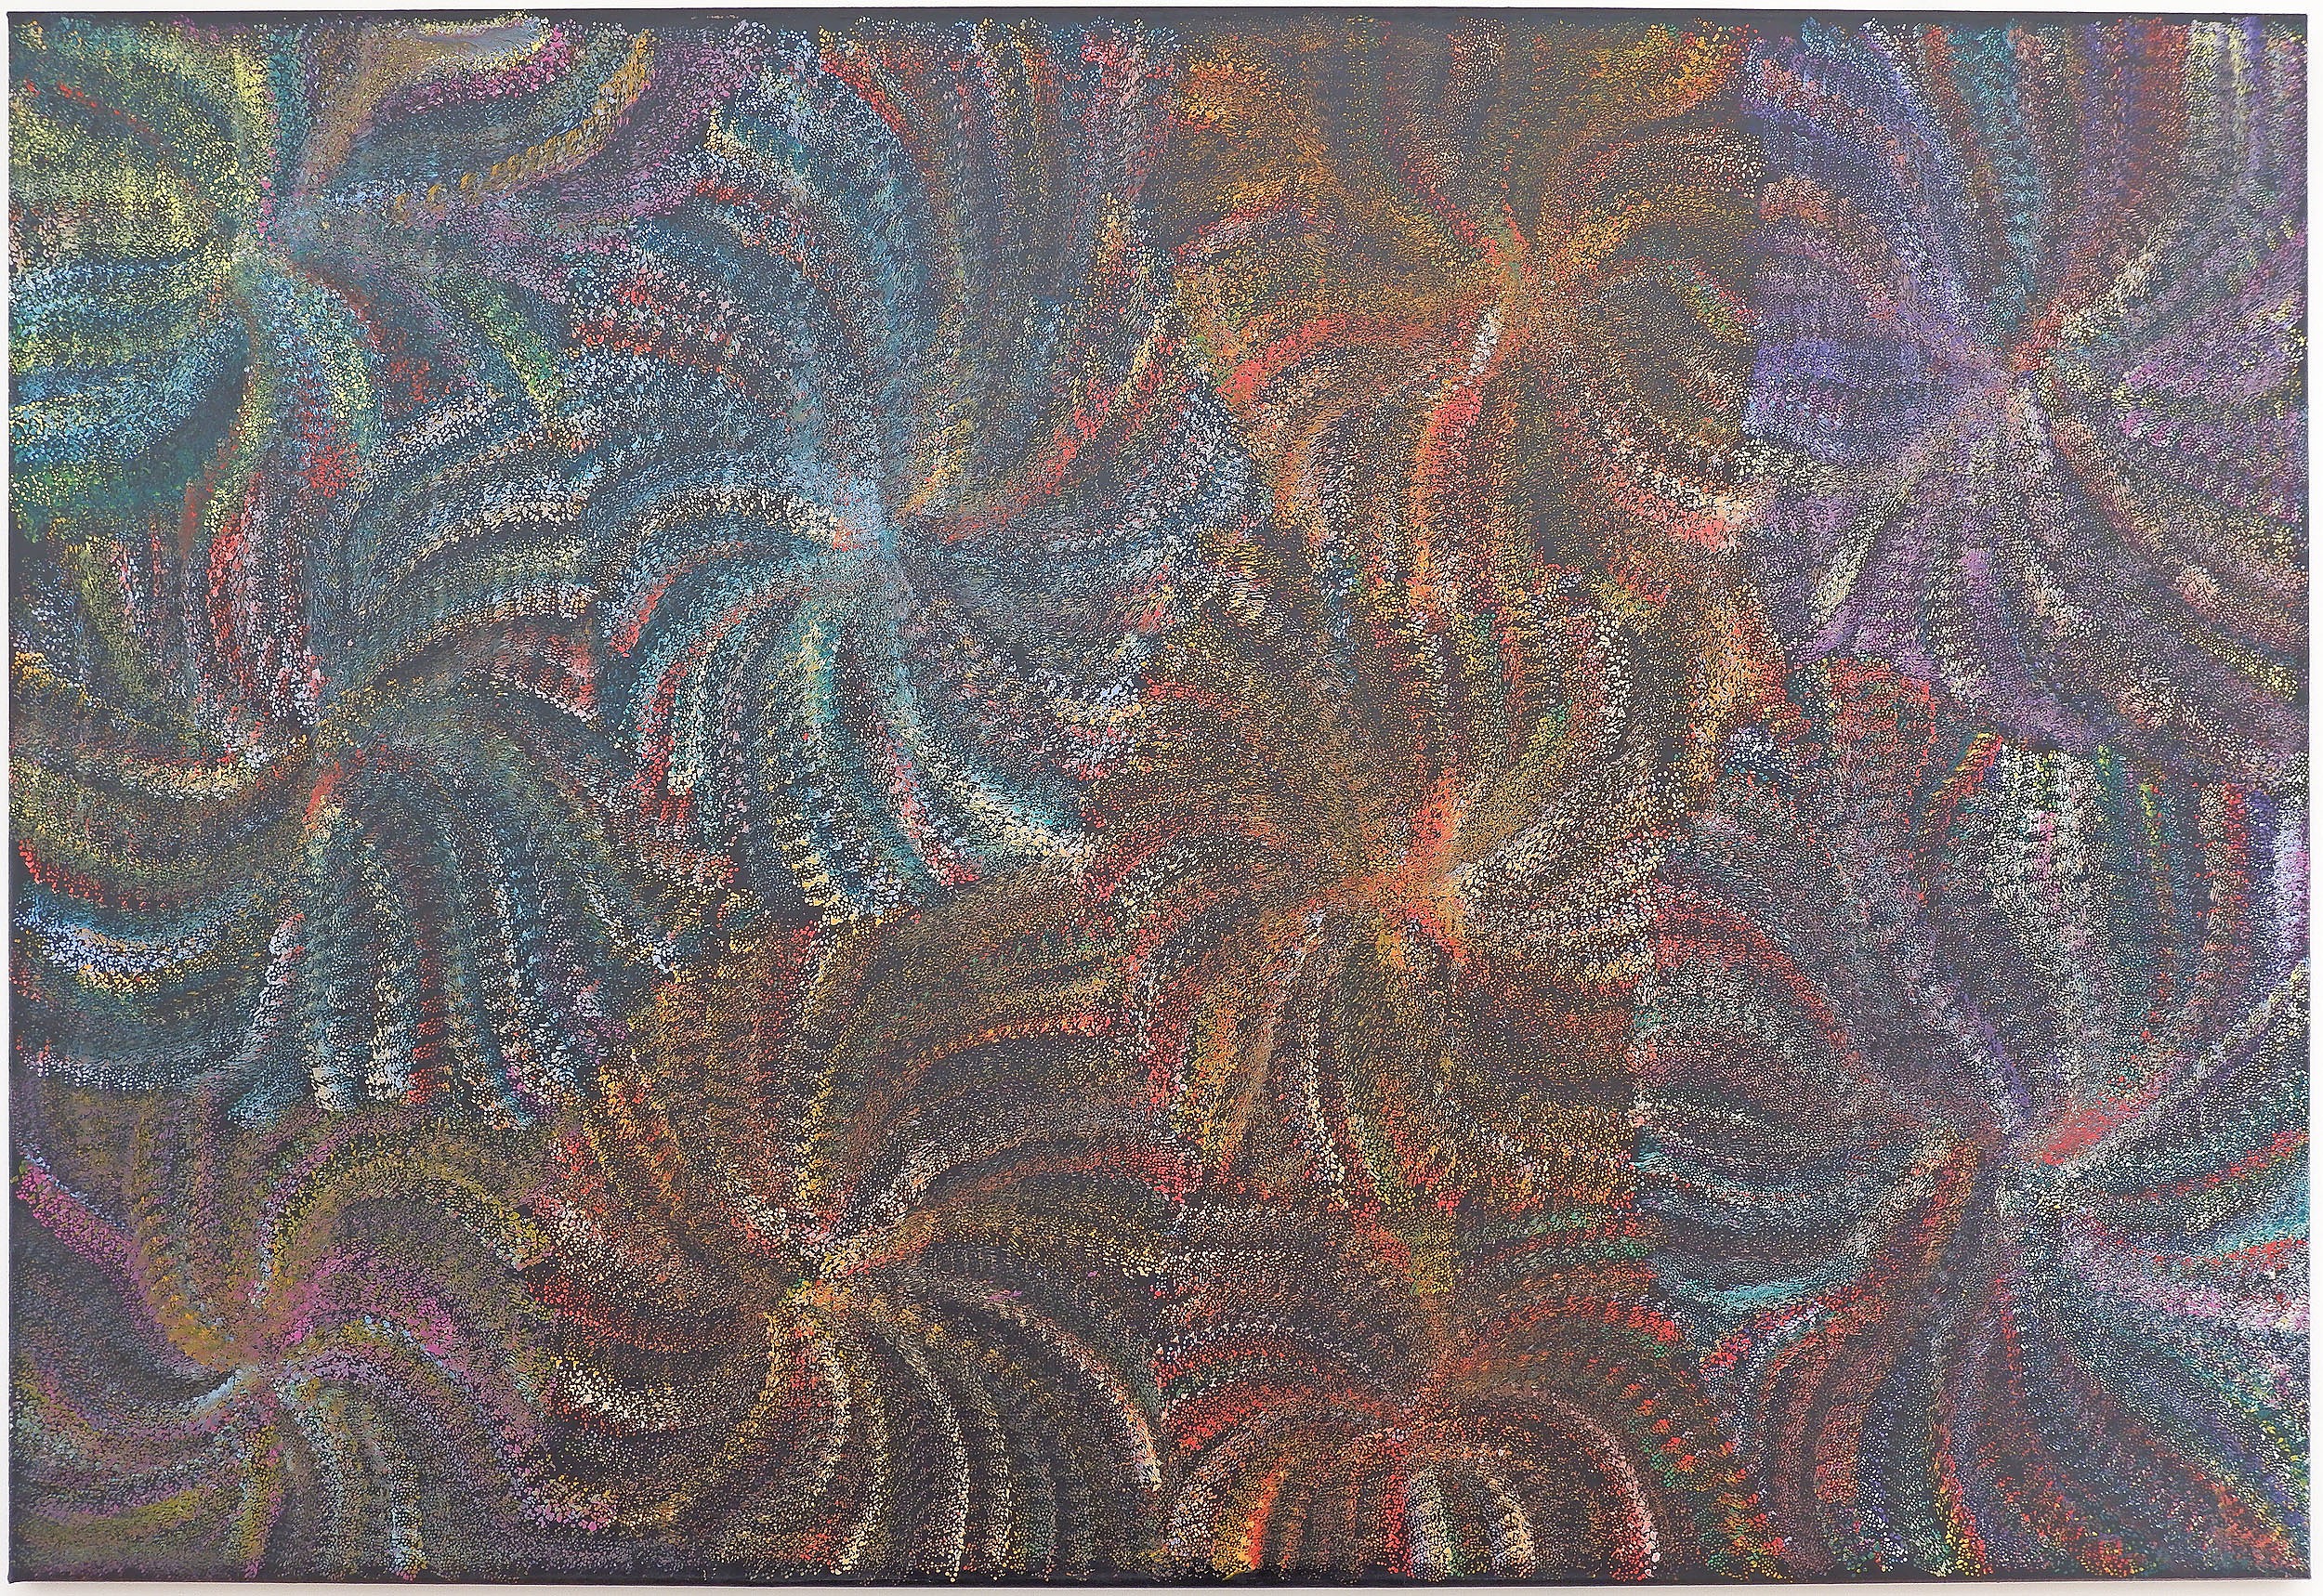 'Maureen Purvis Kngwarreye (born 1962, Anmatyerre language group), Pencil Yam 2003, Acrylic on Canvas'